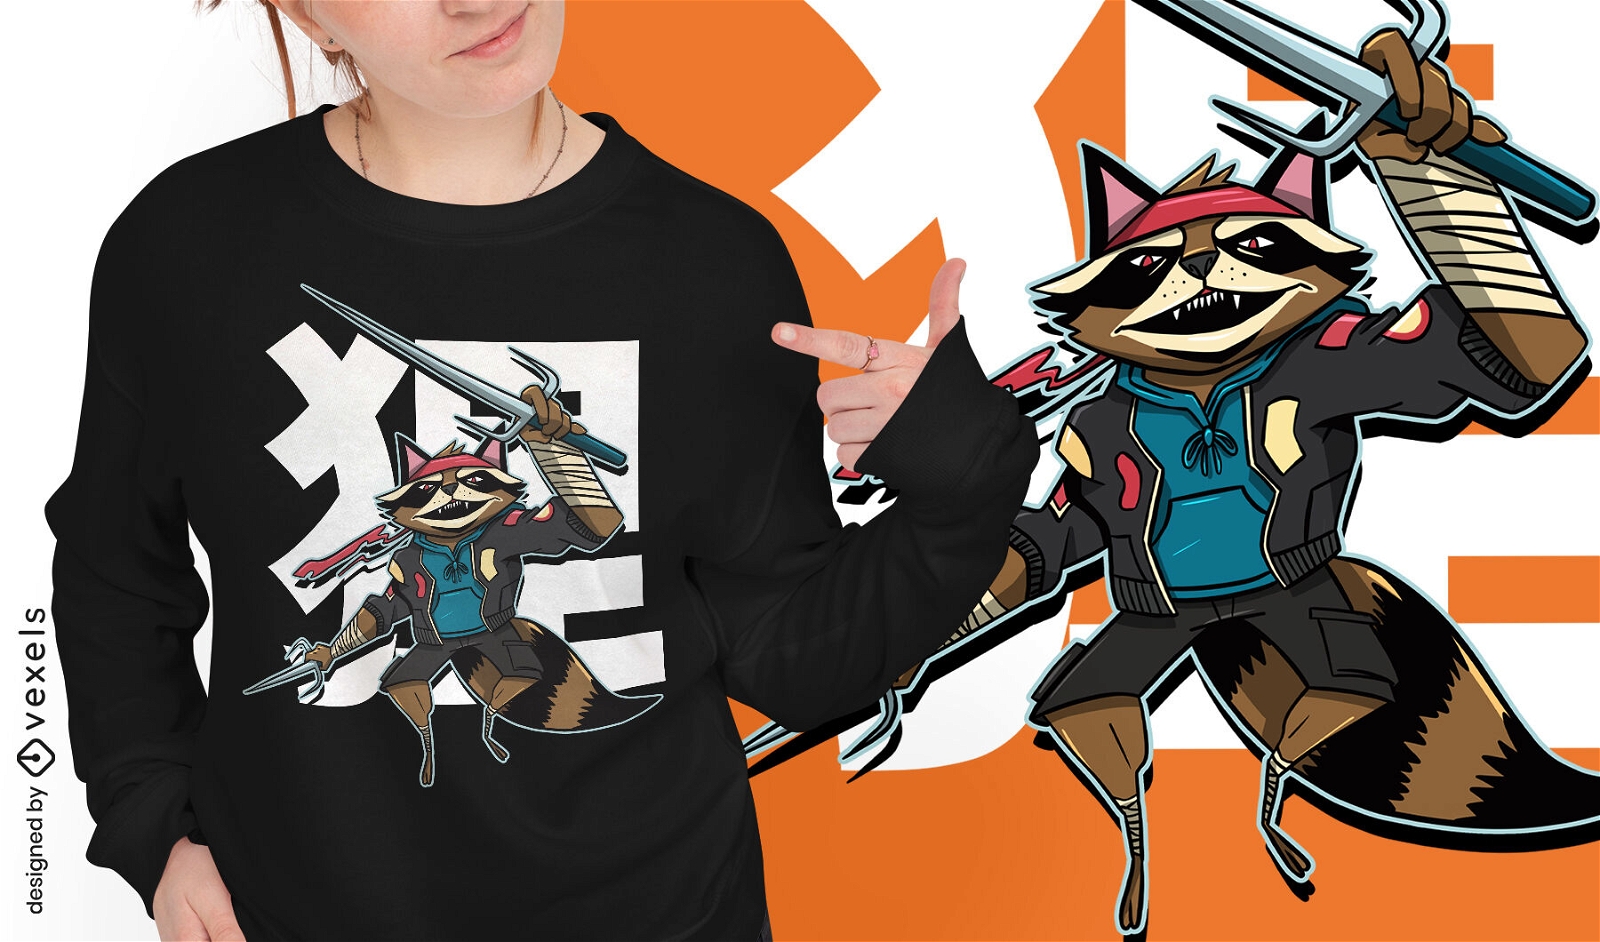 Raccoon modern samurai t-shirt design